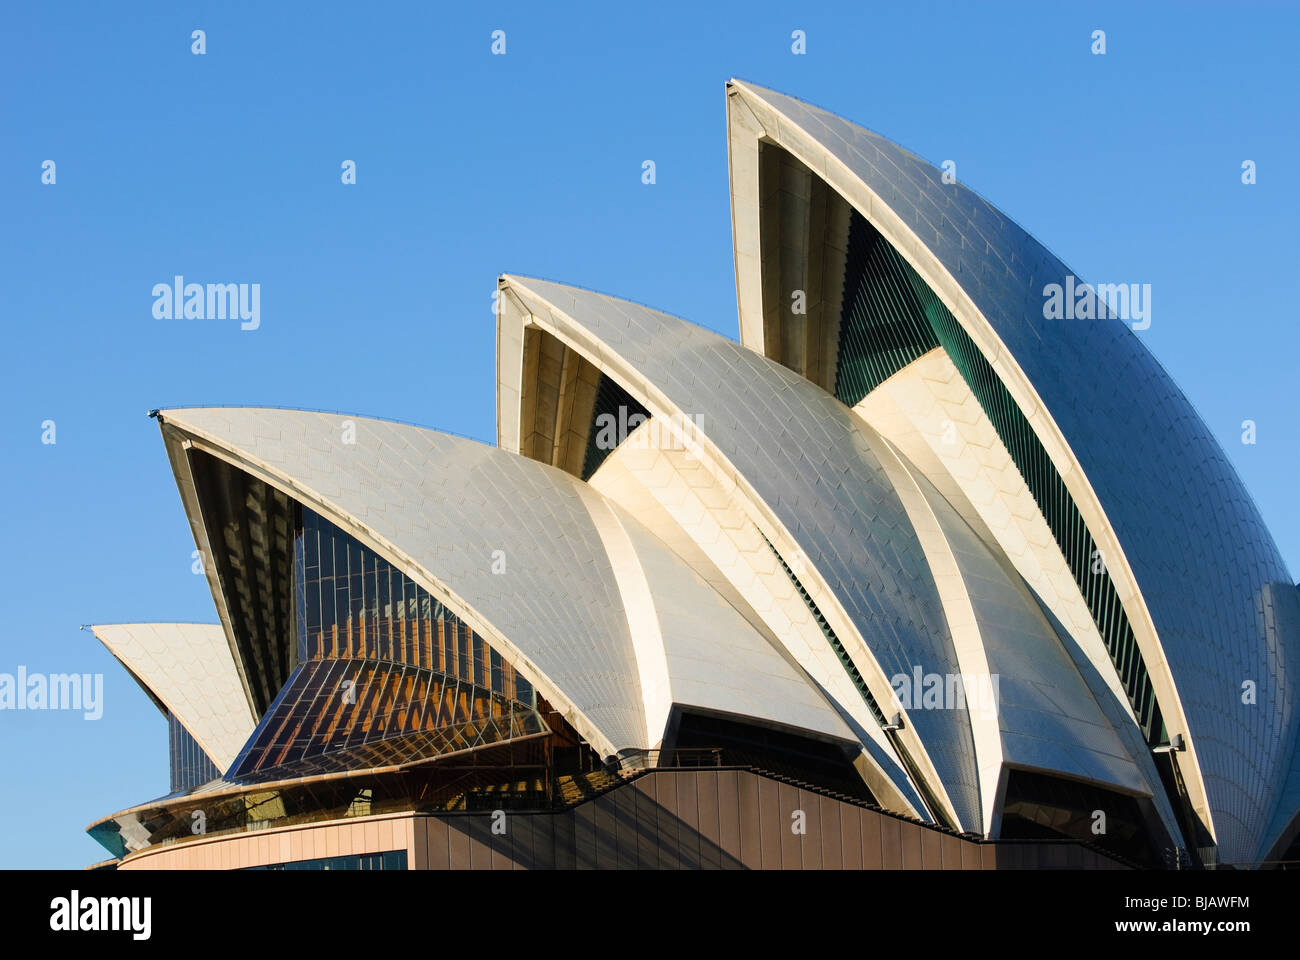 Die berühmte Oper Sydneys spektakulären geschwungenen Dach. Stockfoto